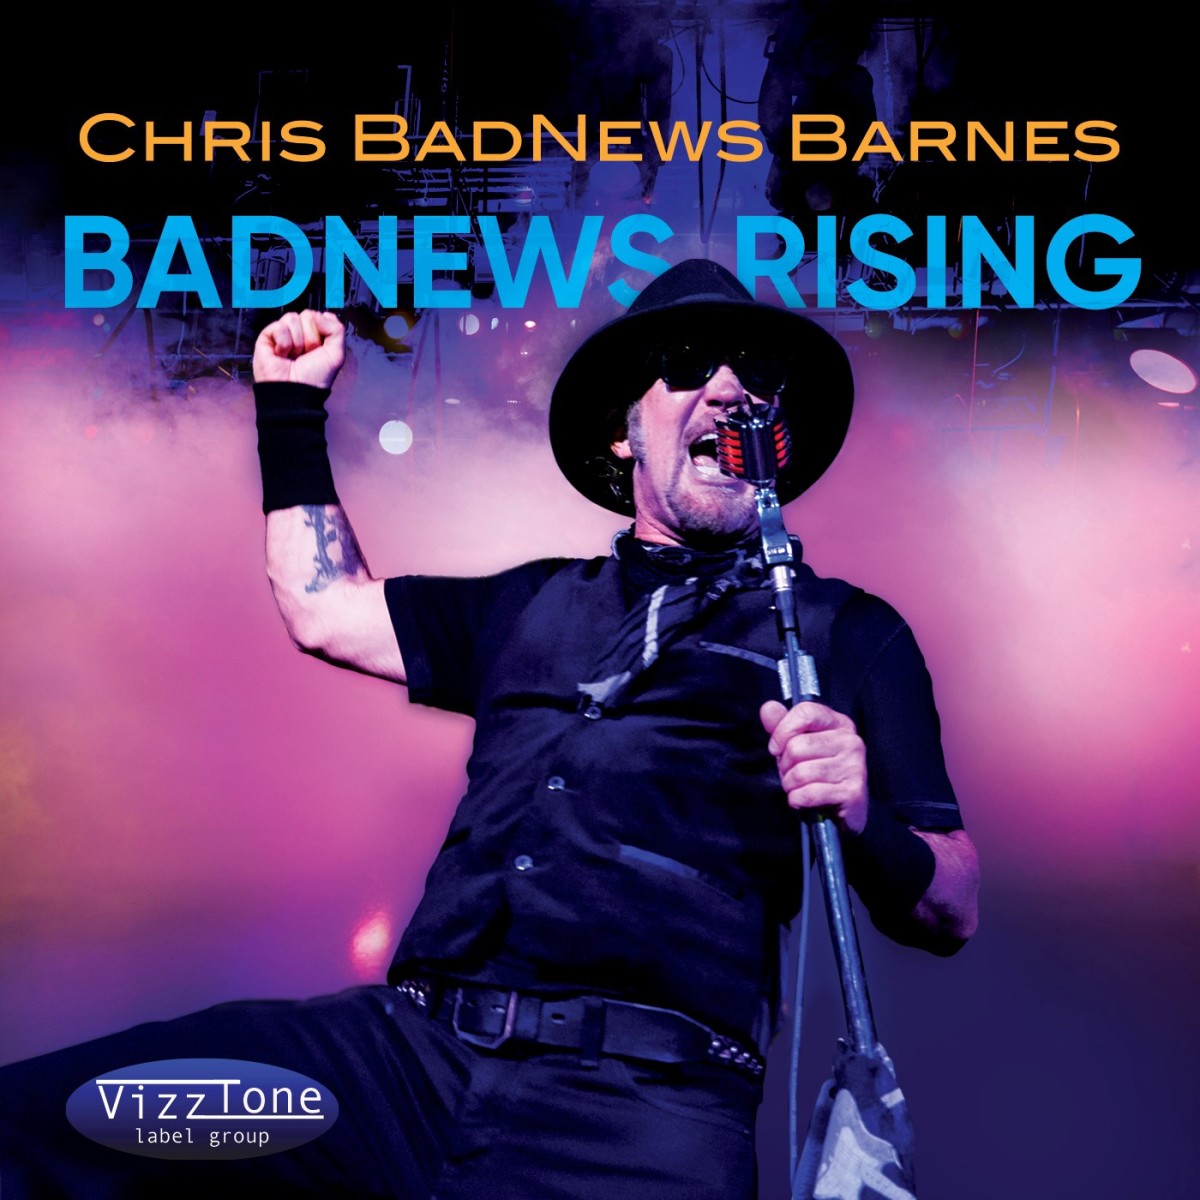 Chris bad News Barnes